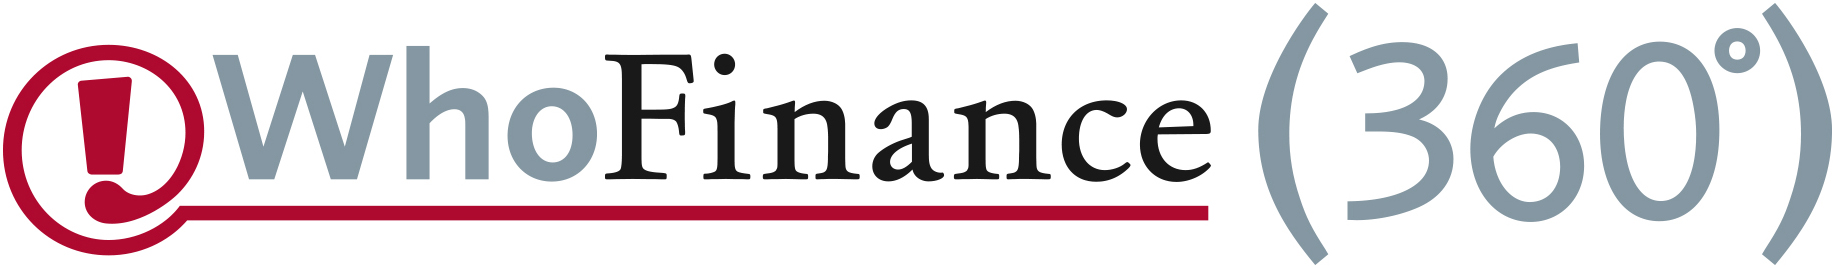 WhoFinance 360° Logo